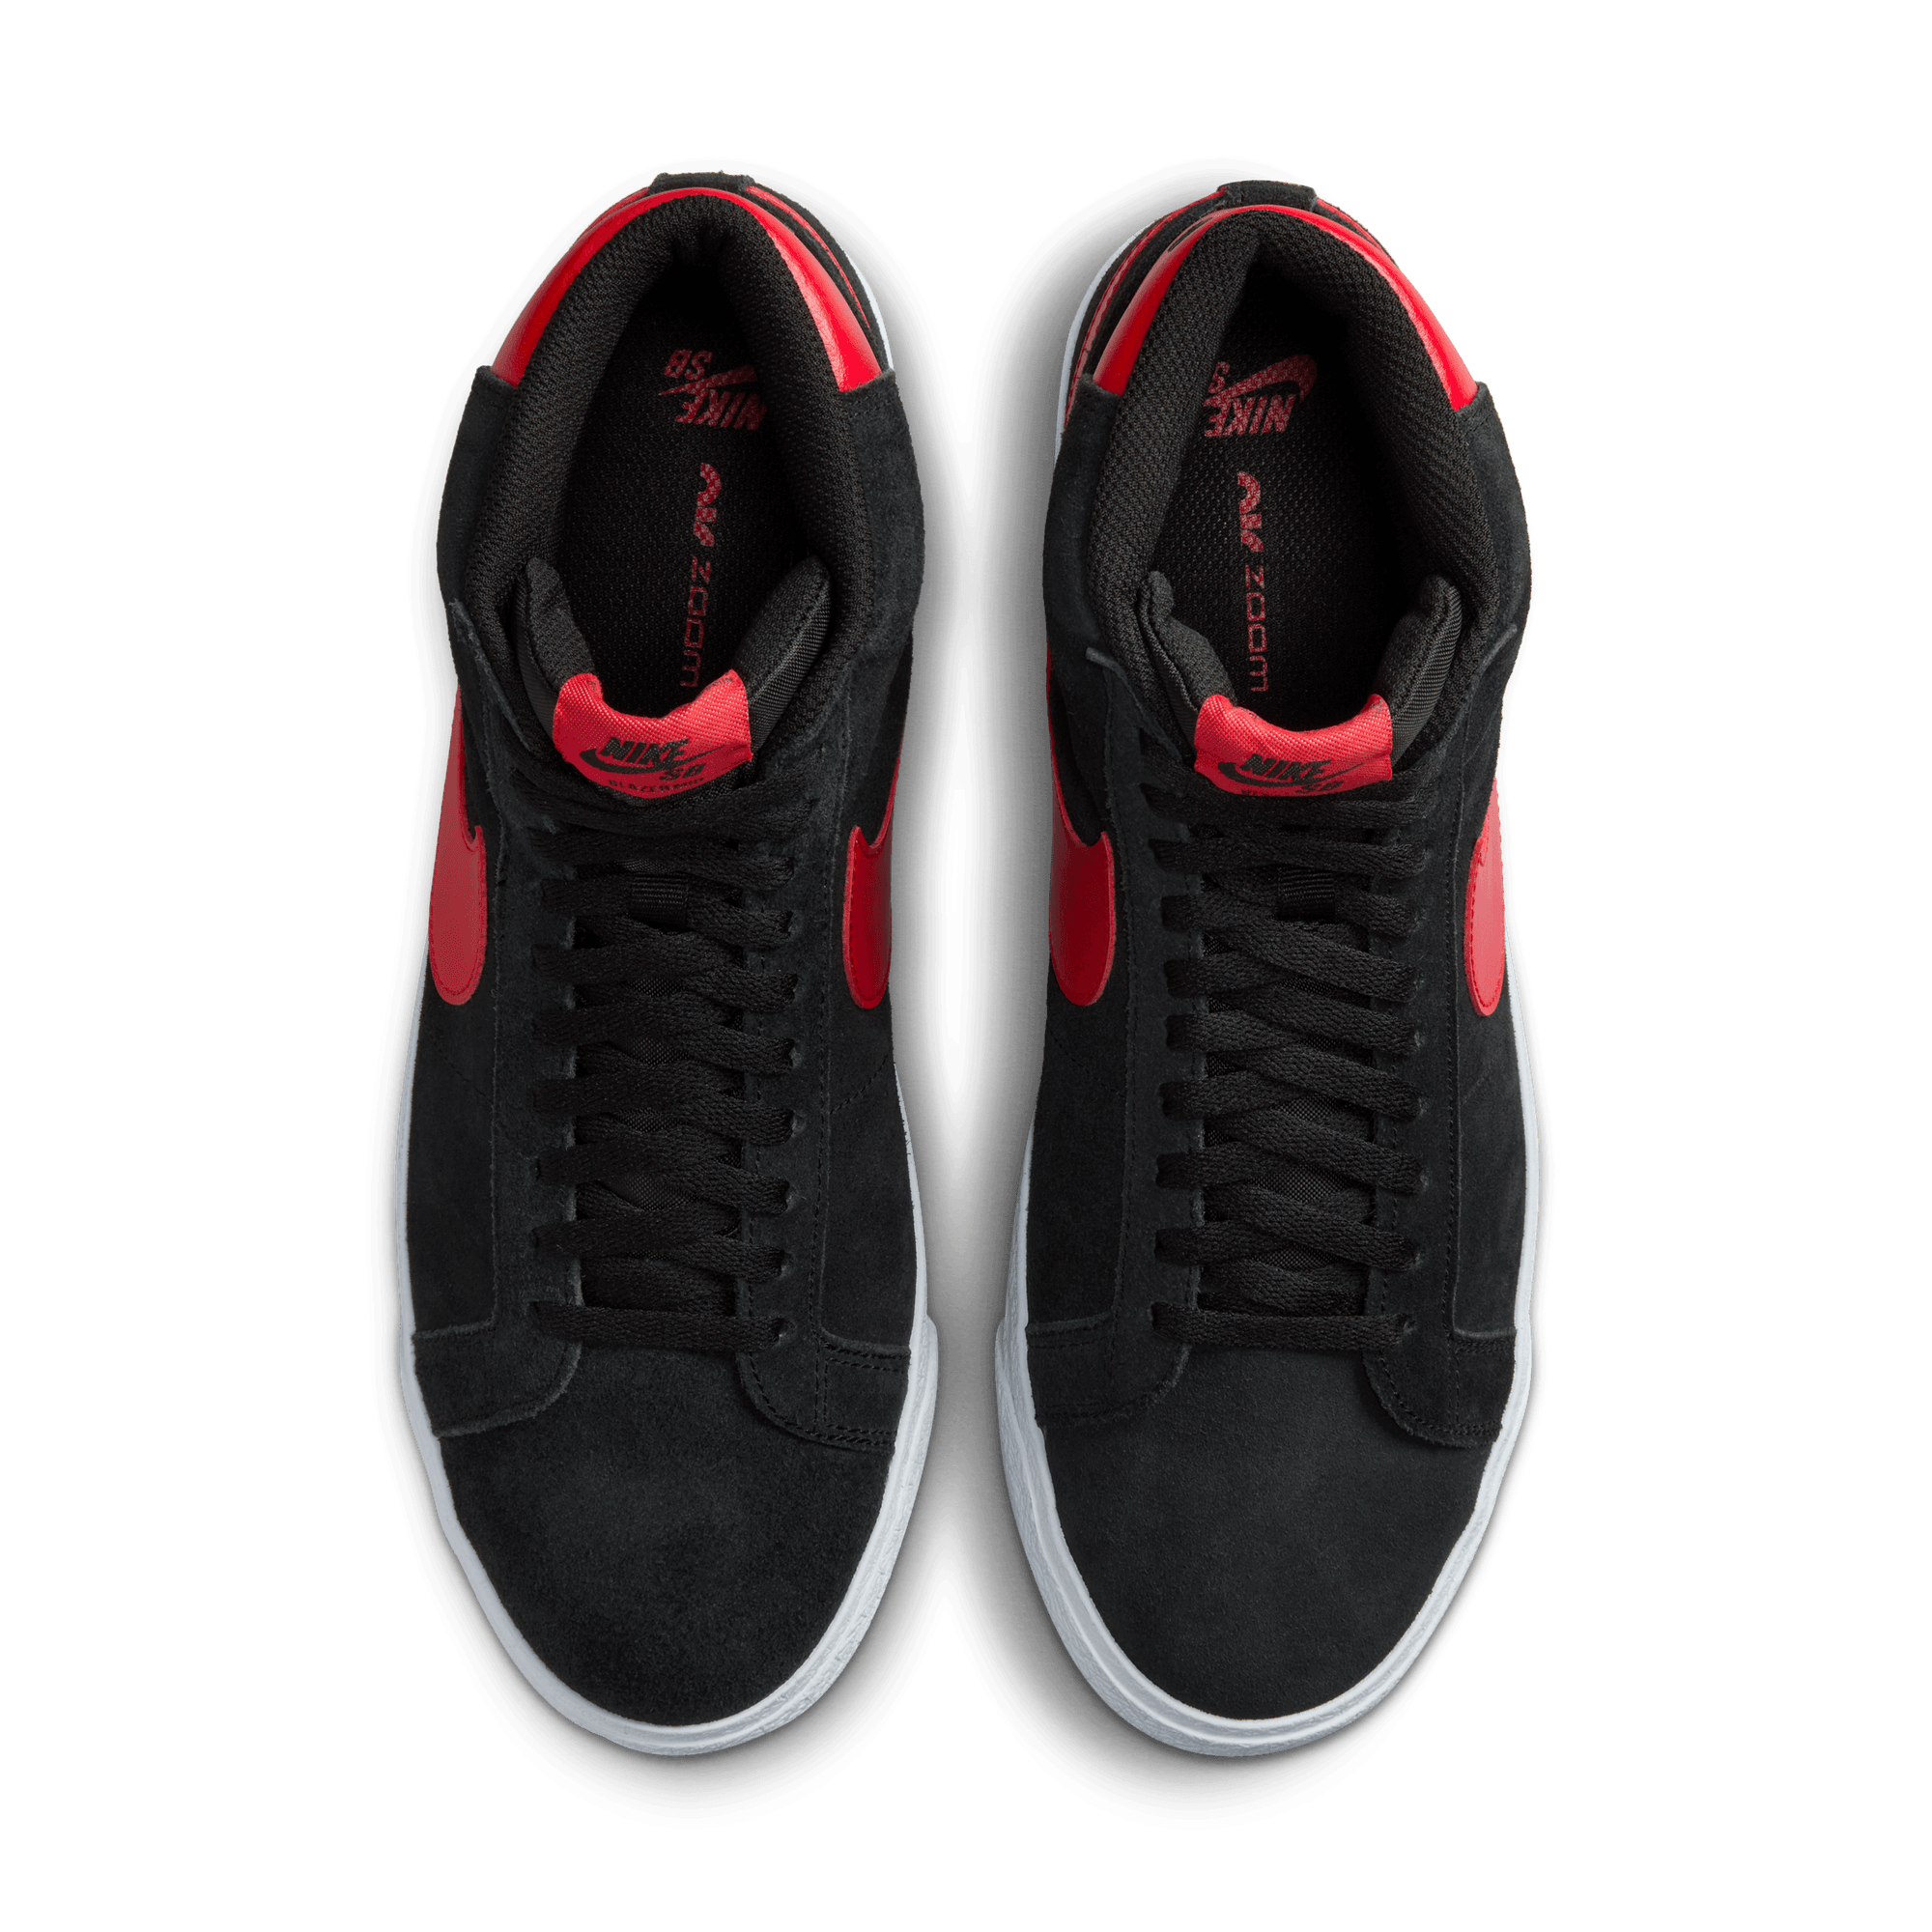 Black/Red Blazer Mid Nike SB Skate Shoe Top